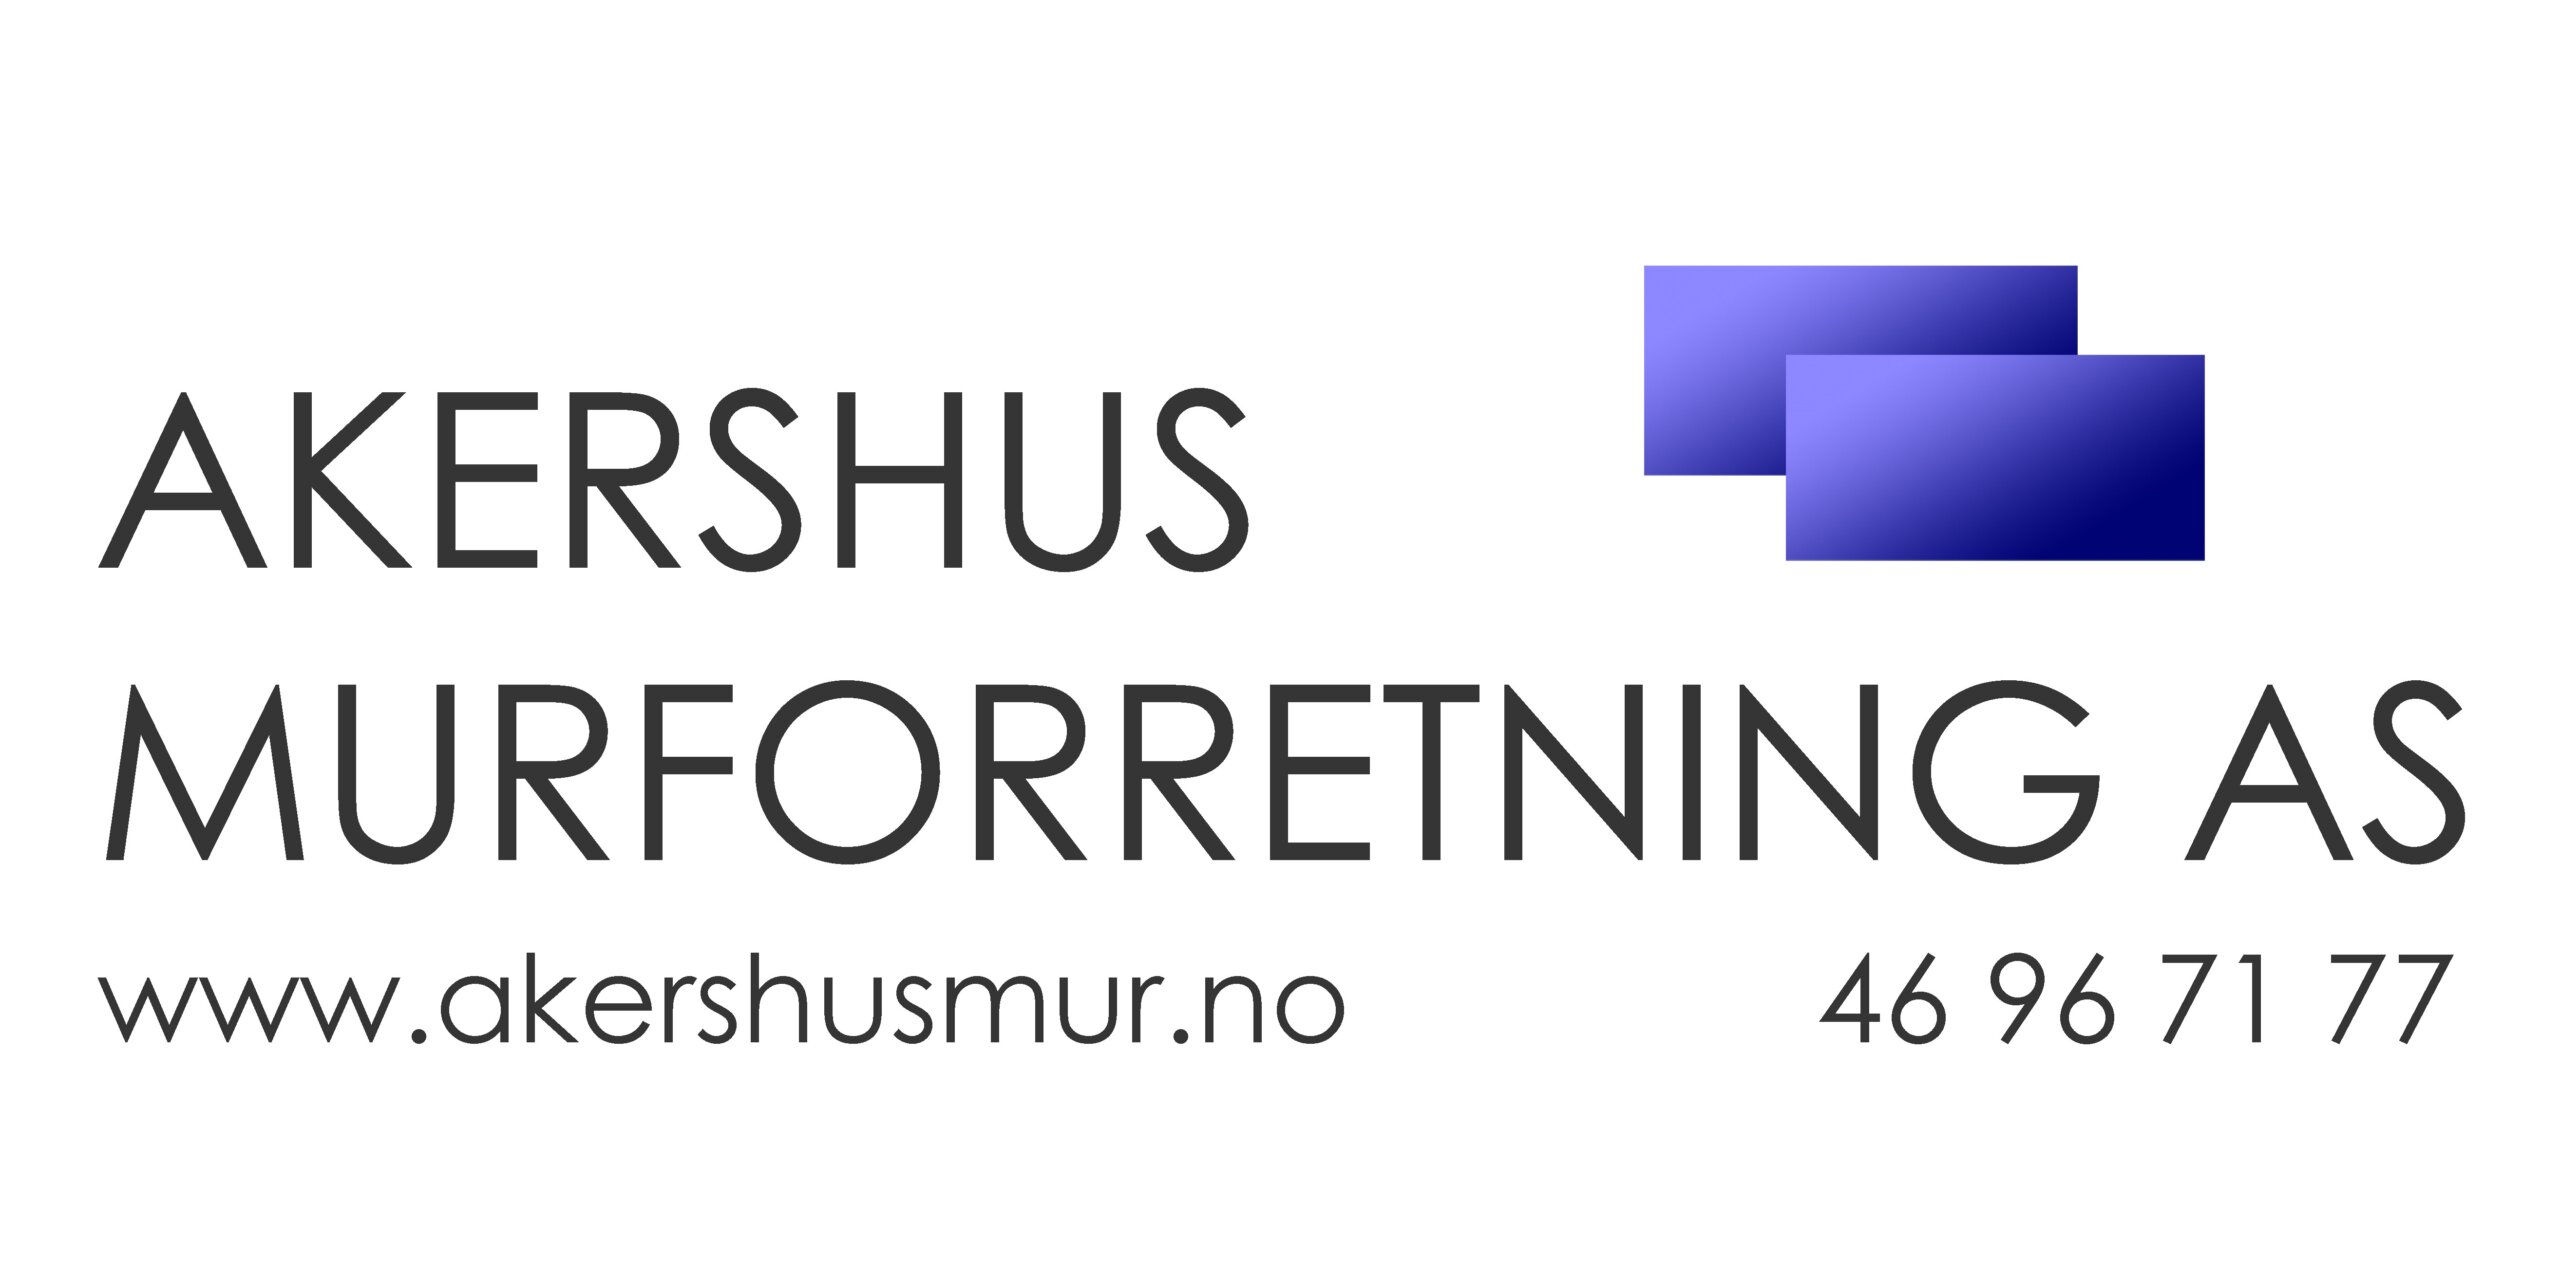 Akershus Murforretning AS